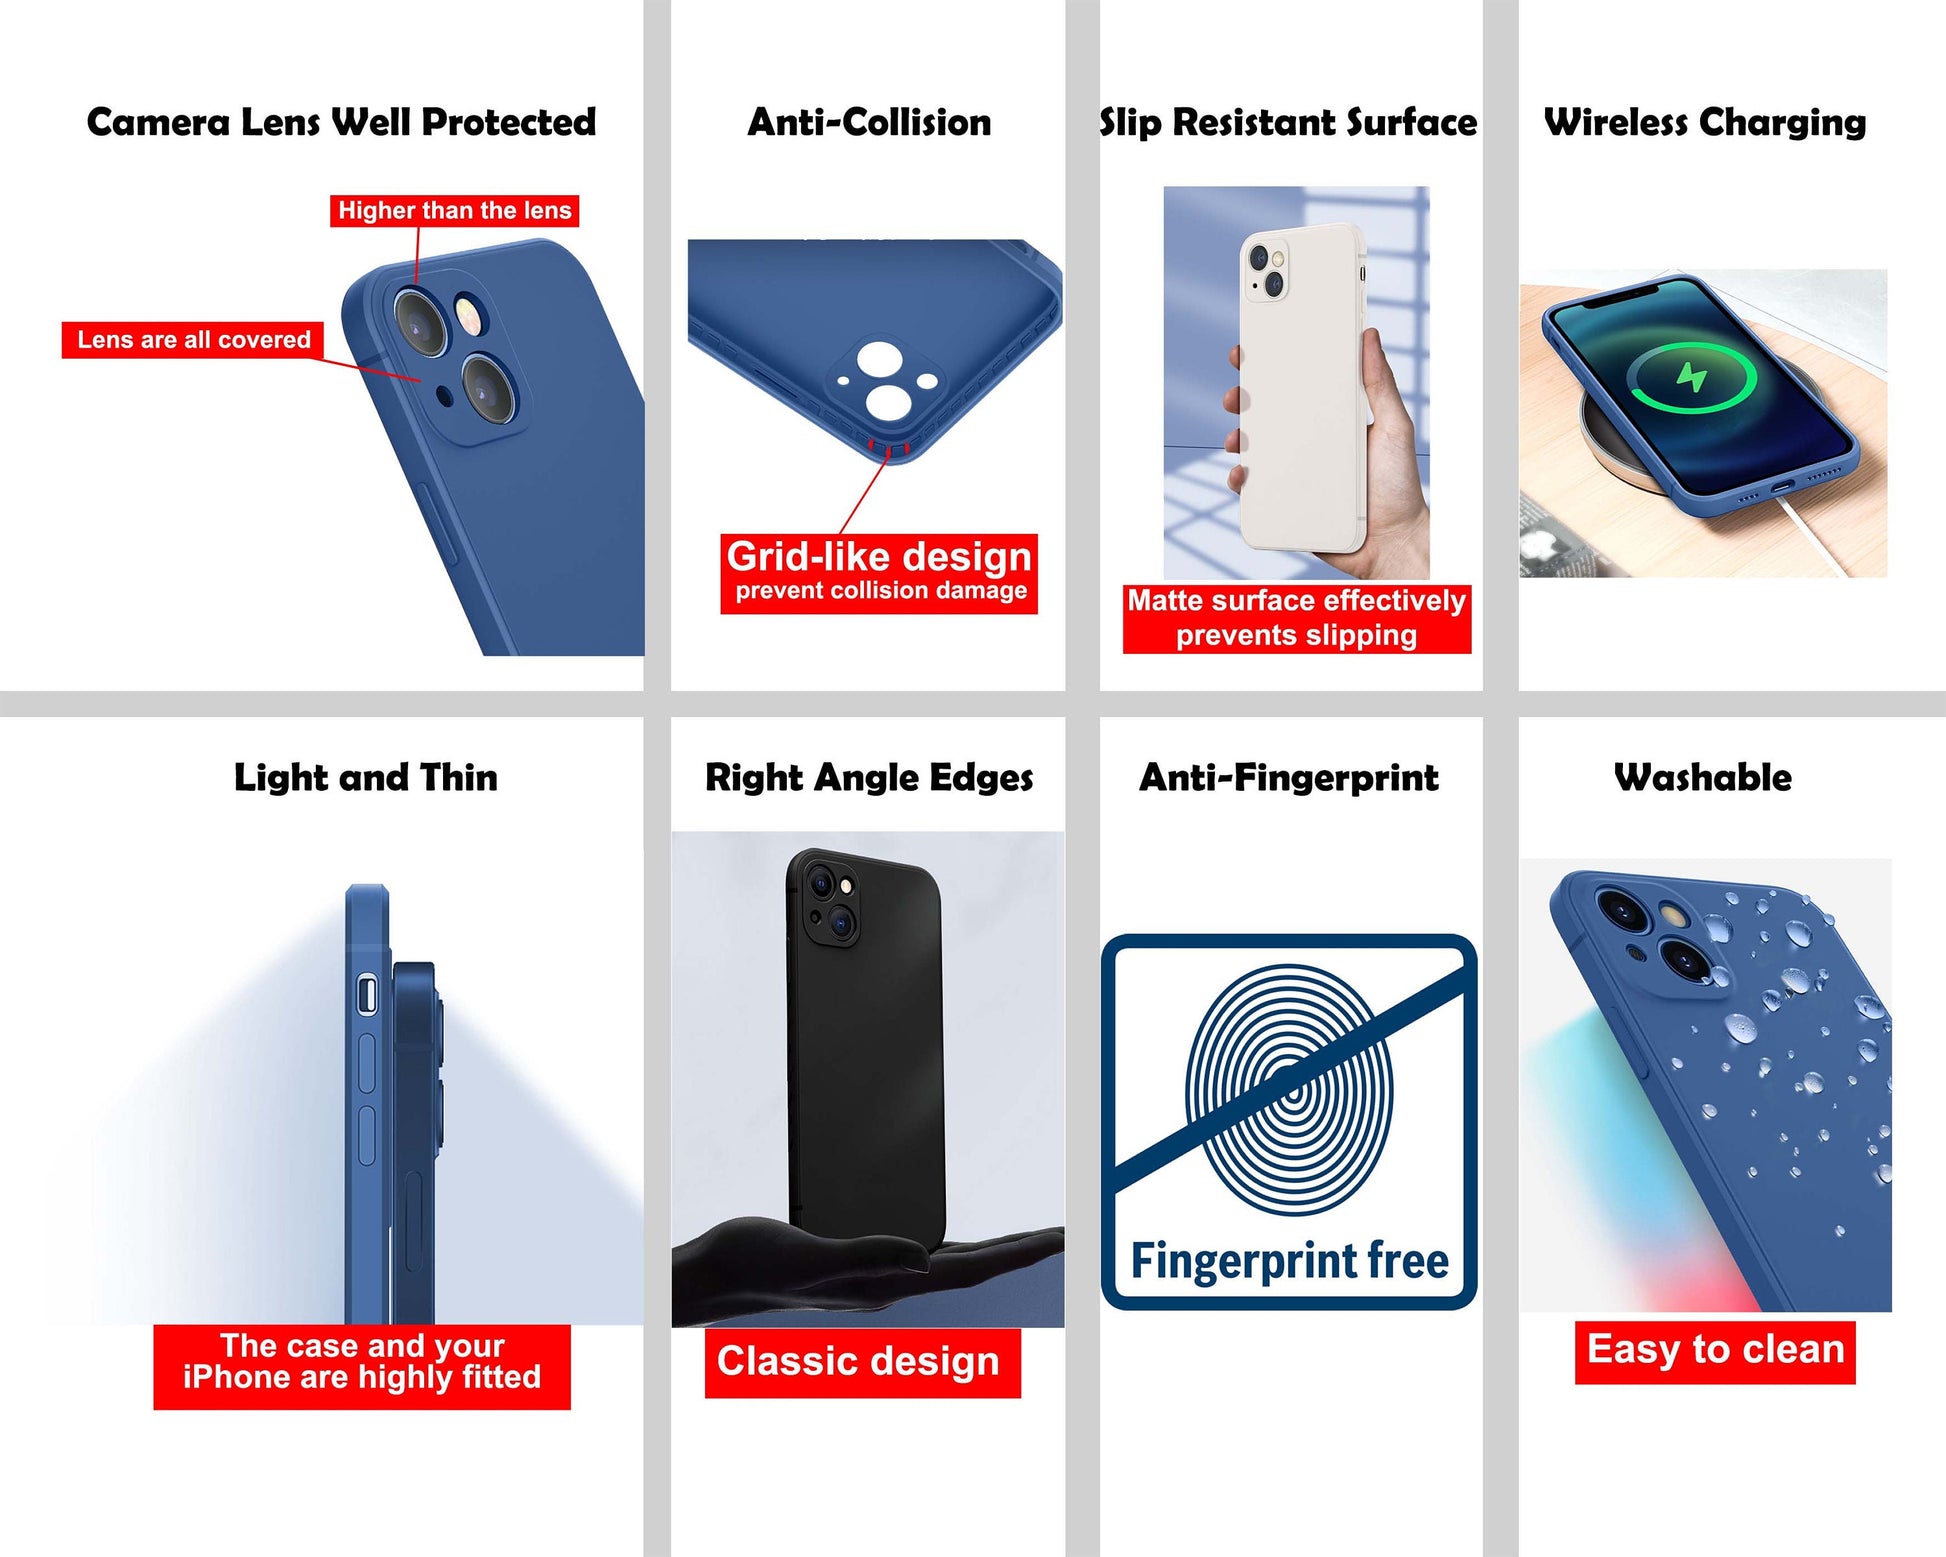 Henri Matisse Art Iphone 14 Case, Iphone 13 Pro Case, Iphone 7 Case, Iphone 8 Plus Case Art, Designer Iphone Case, Iphone Case Silicone